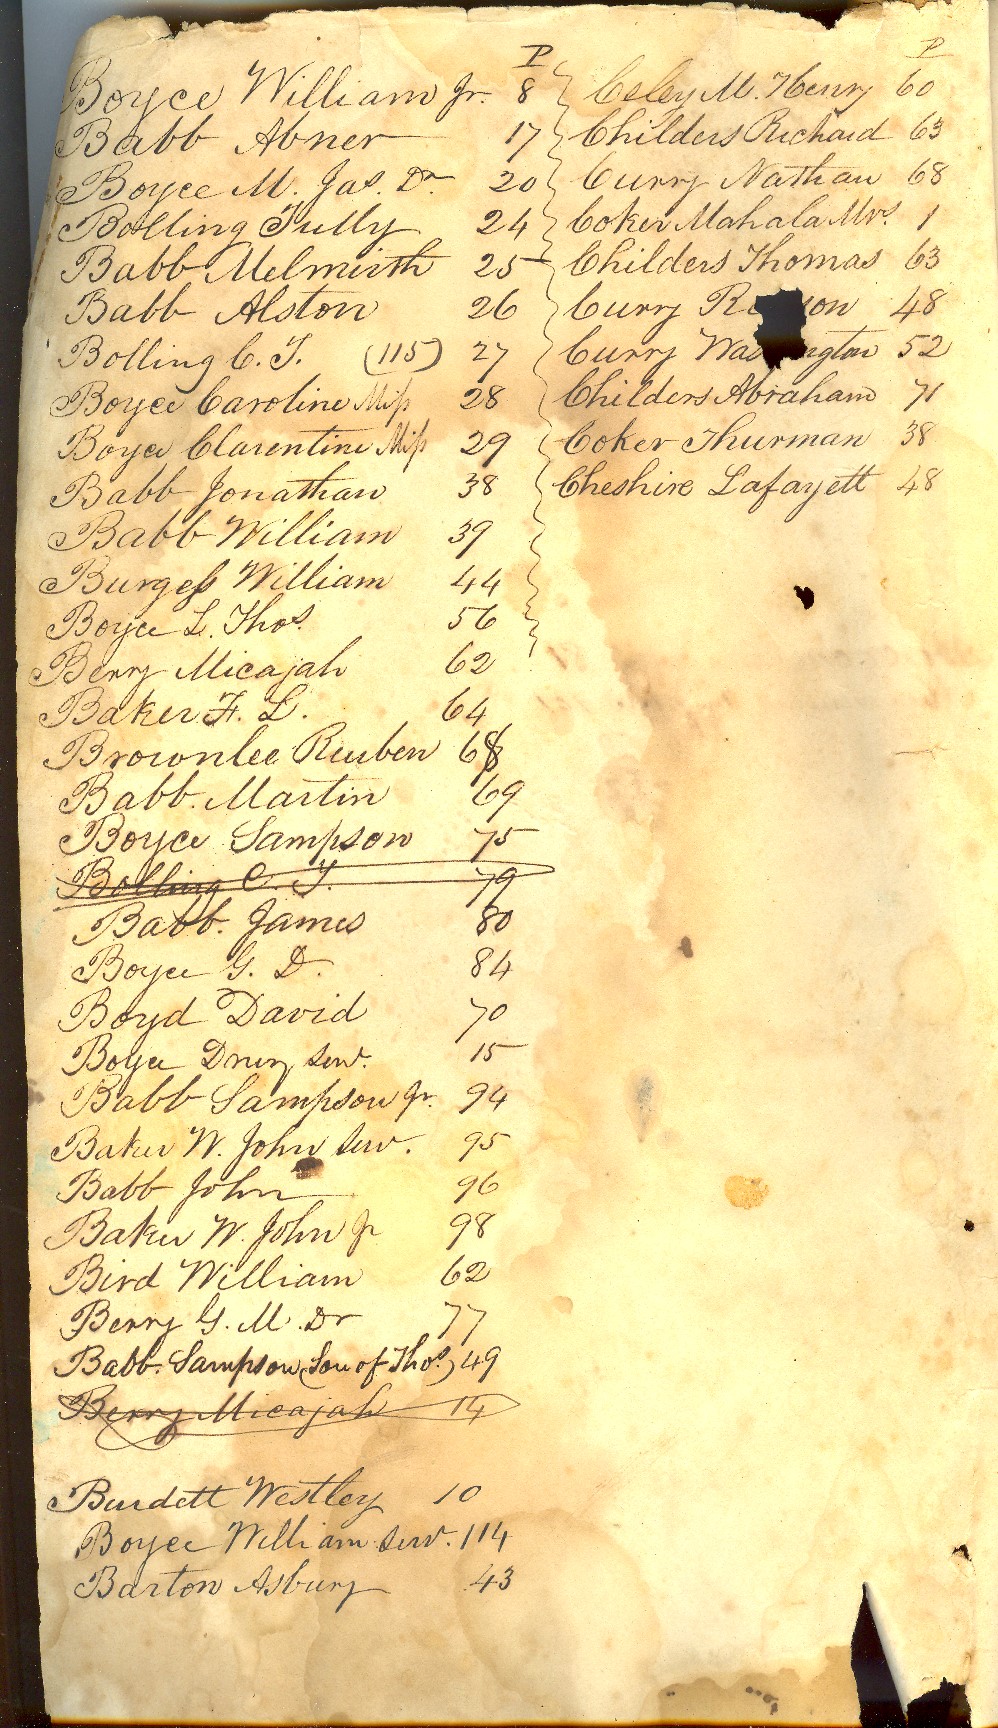 Bolling Store Ledger - 1844 Listing, p. 2